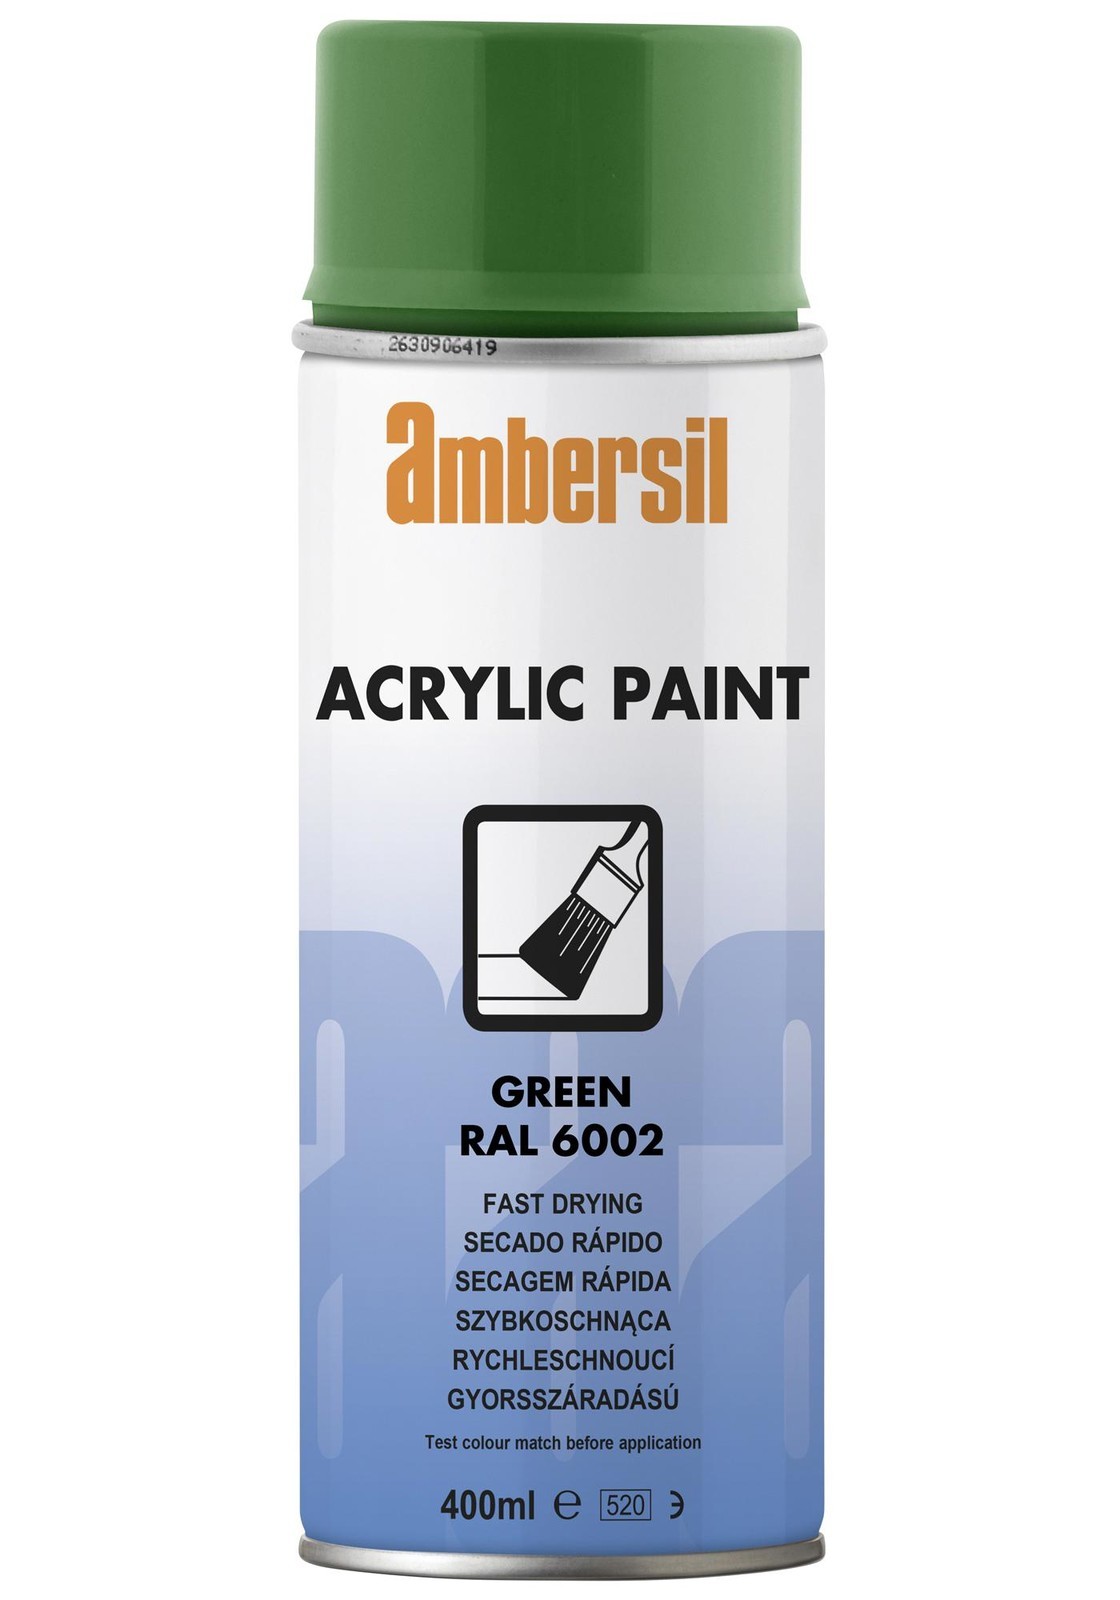 Ambersil Acrylic Paint, Green Ral 6002, 400Ml Conformal Coating, Aerosol, Green, 400Ml